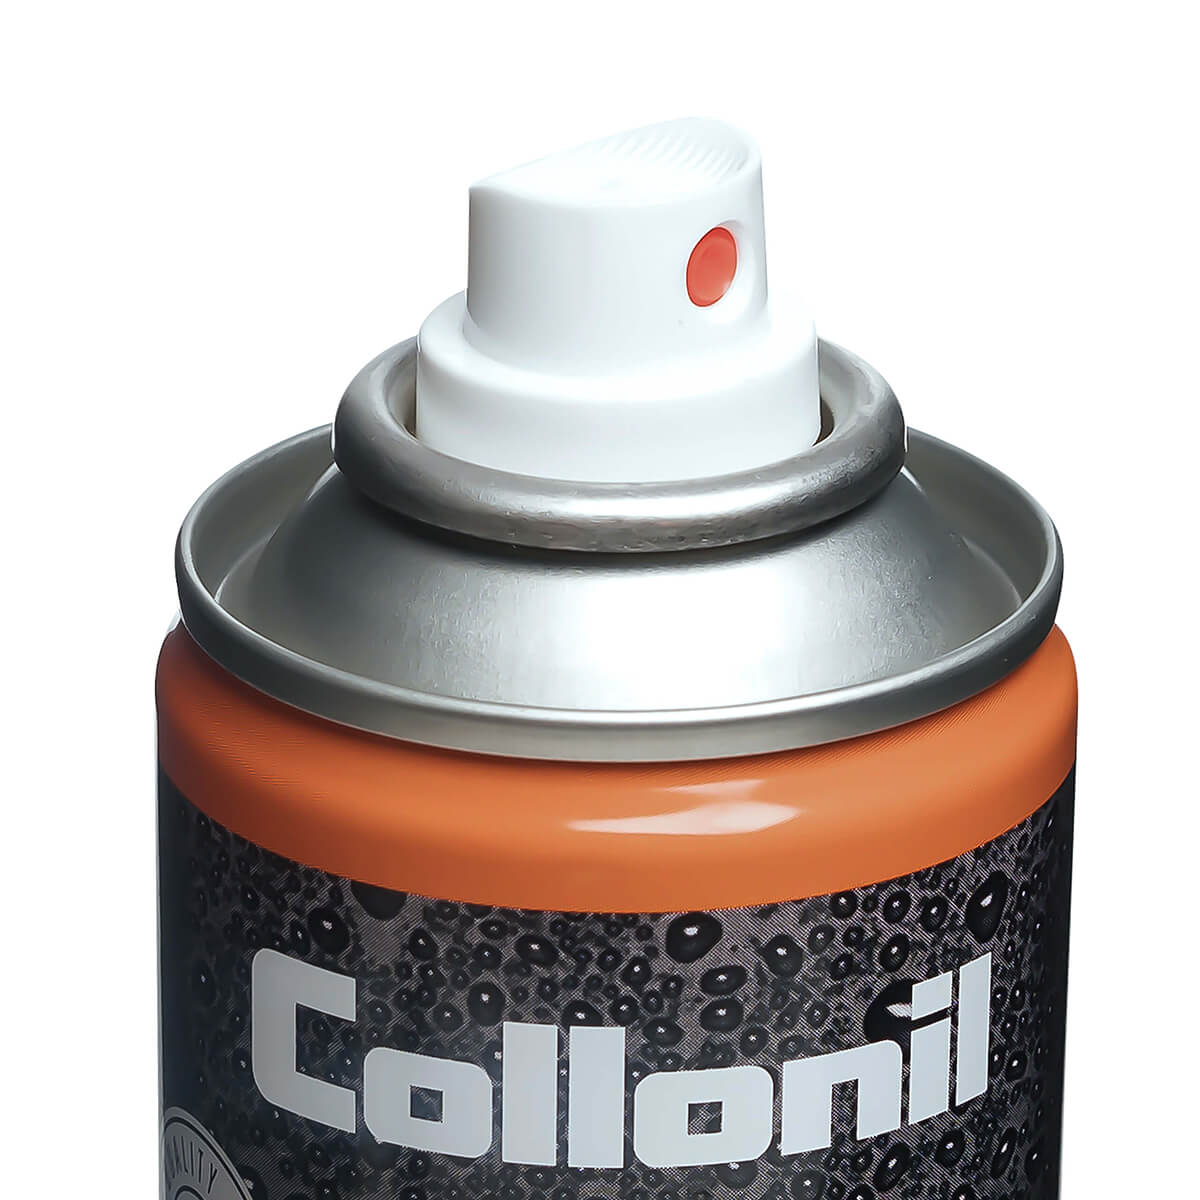 Collonil Carbon Pro Imprägnierspray 400 ml.